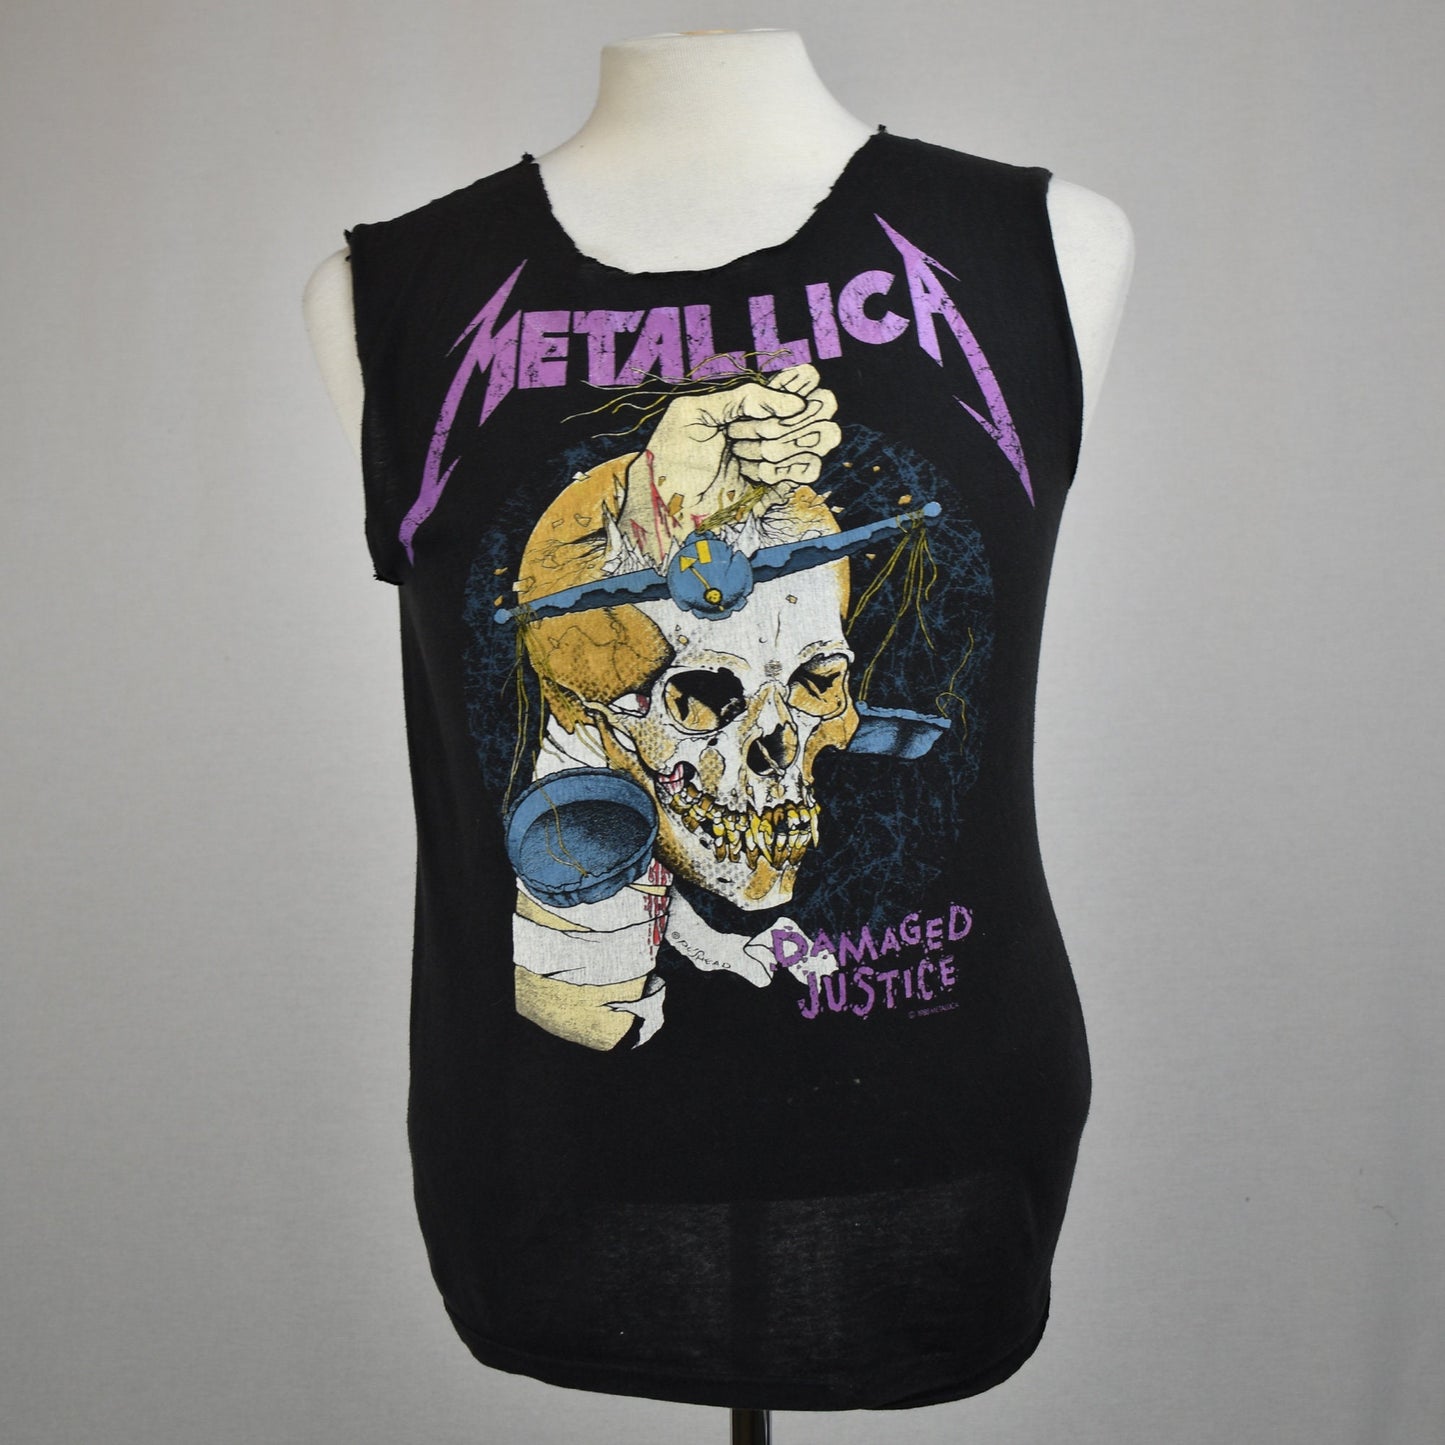 Vintage Metallica 1988 Damaged Justice Summer 88 Tour Tee Tank Top T-shirt